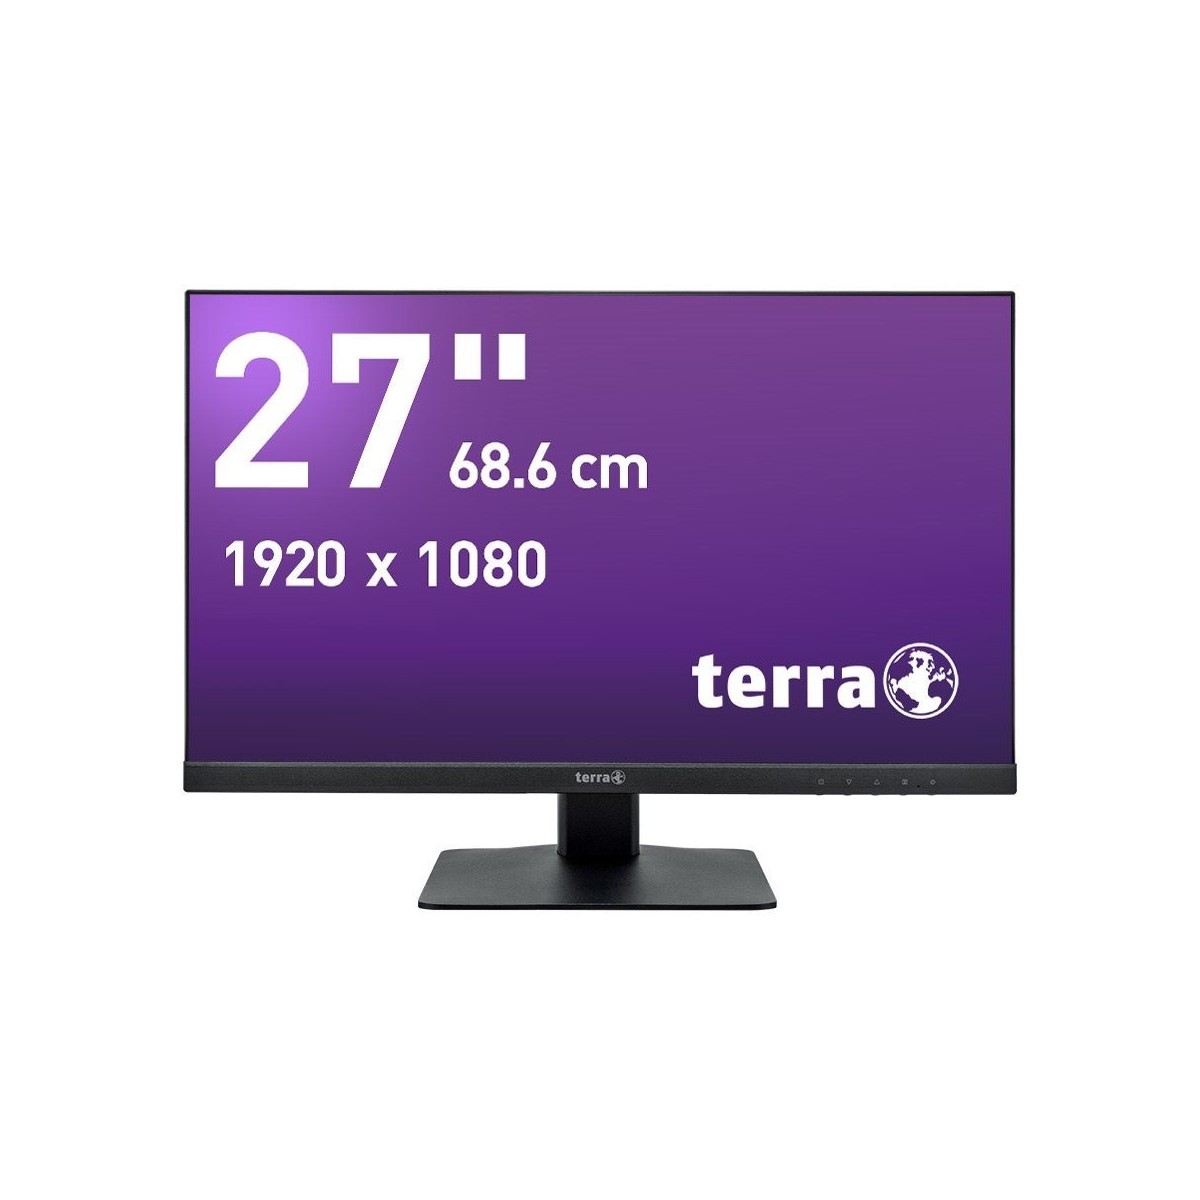 TERRA LED 2748W V2 schwarz DP-HDMI GREENLINE PLUS - Flat Screen - 68.6 cm